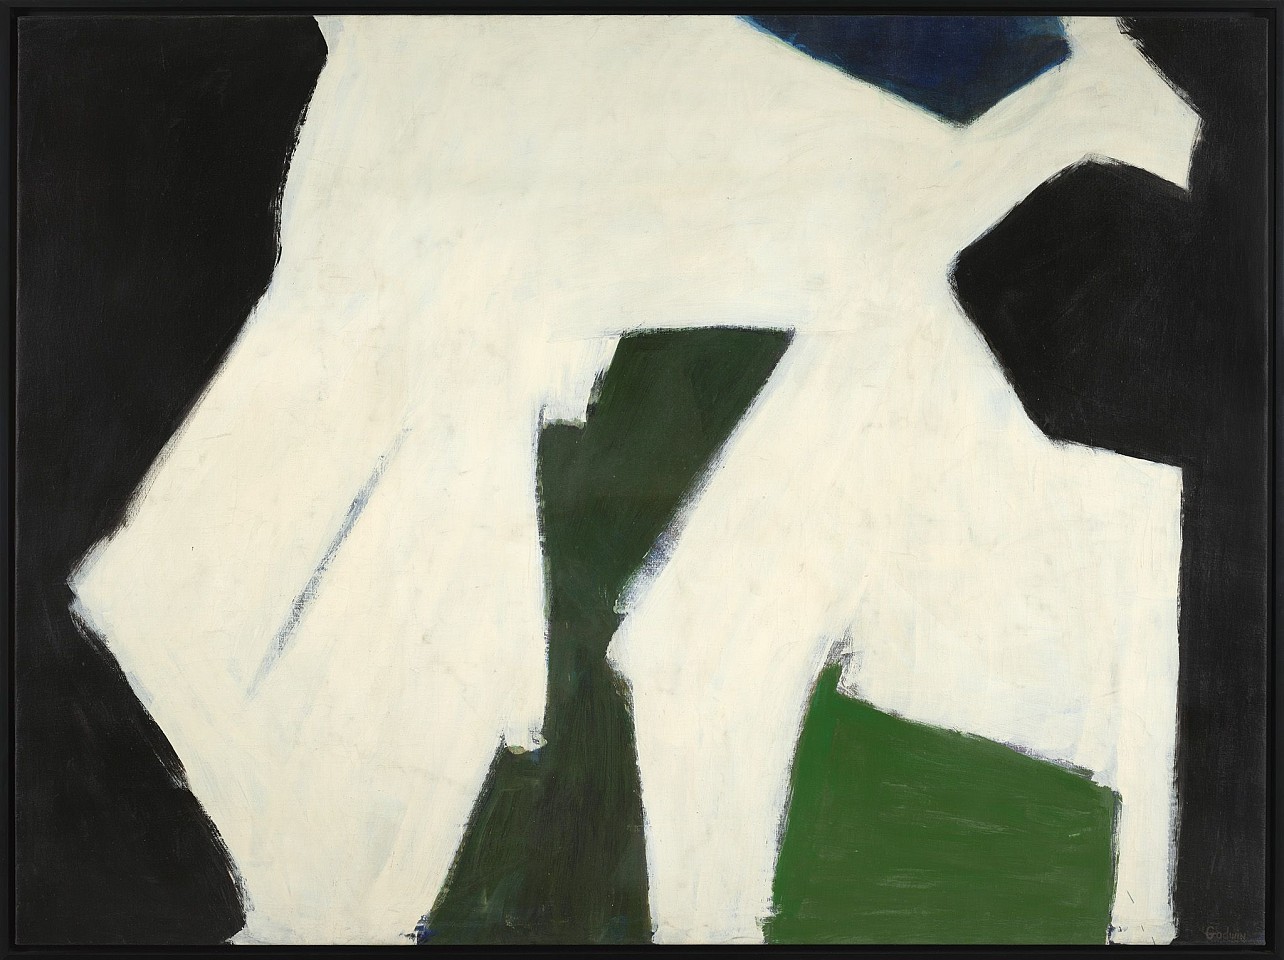 Judith Godwin, Point to Green, 1959
Oil on linen, 59 1/2 x 79 1/2 in. (151.1 x 201.9 cm)
GOD-00053